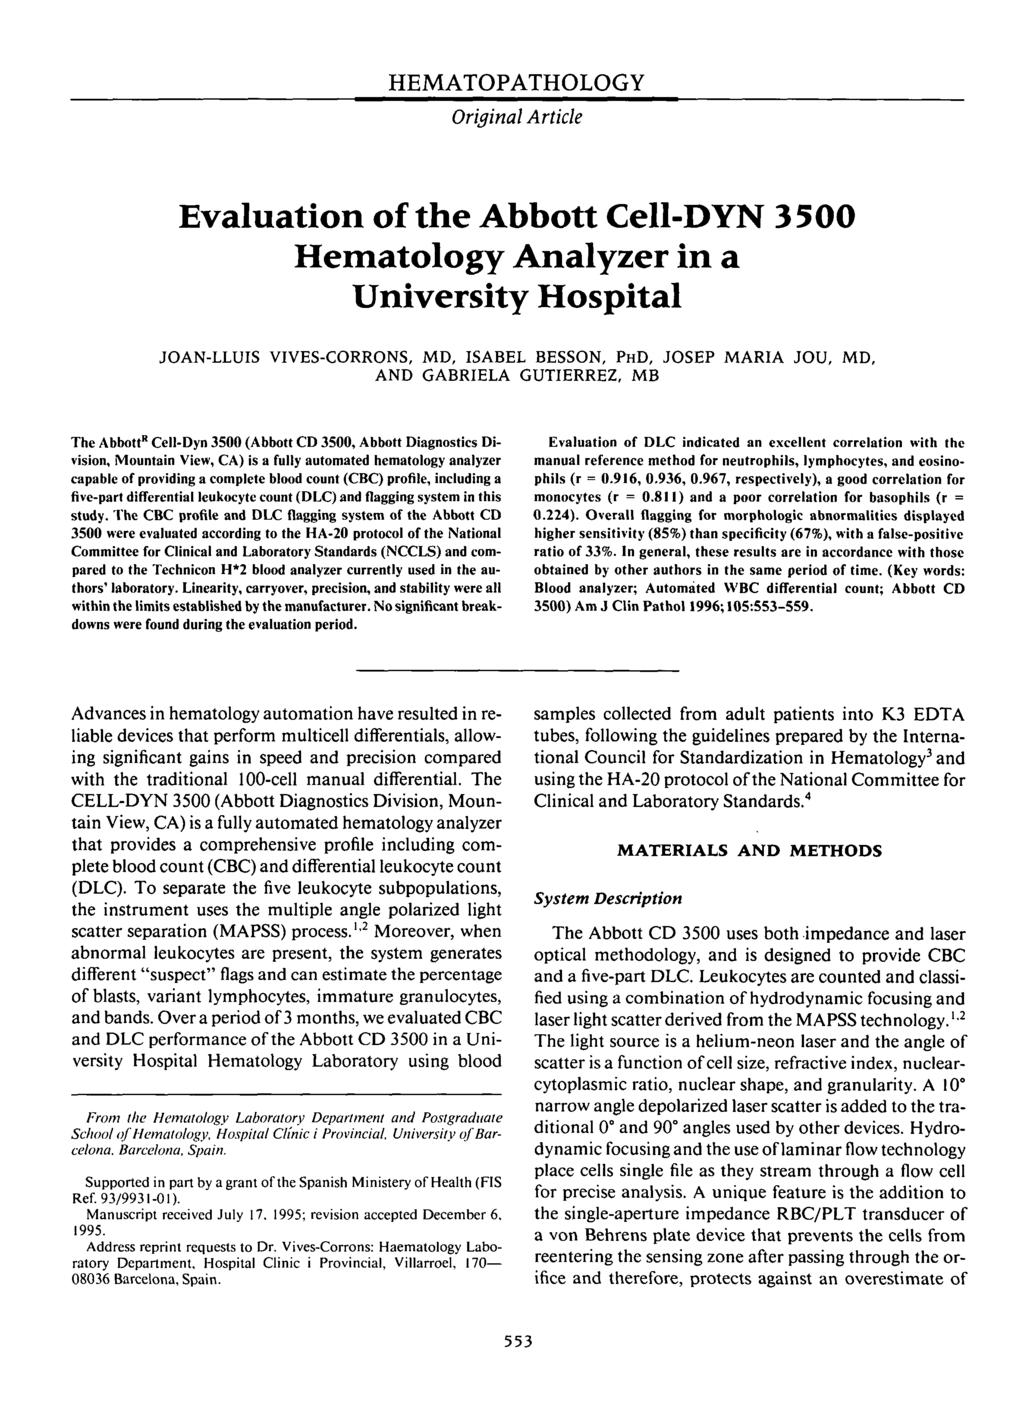 HEMATOPATHOLOGY Evaluation of the Abbott Cell-DYN 3500 Hematology Analyzer in a University Hospital JOAN-LLUIS VIVES-CORRONS, MD, ISABEL BESSON, PHD, JOSEP MARIA JOU, MD, AND GABRIELA GUTIERREZ, MB